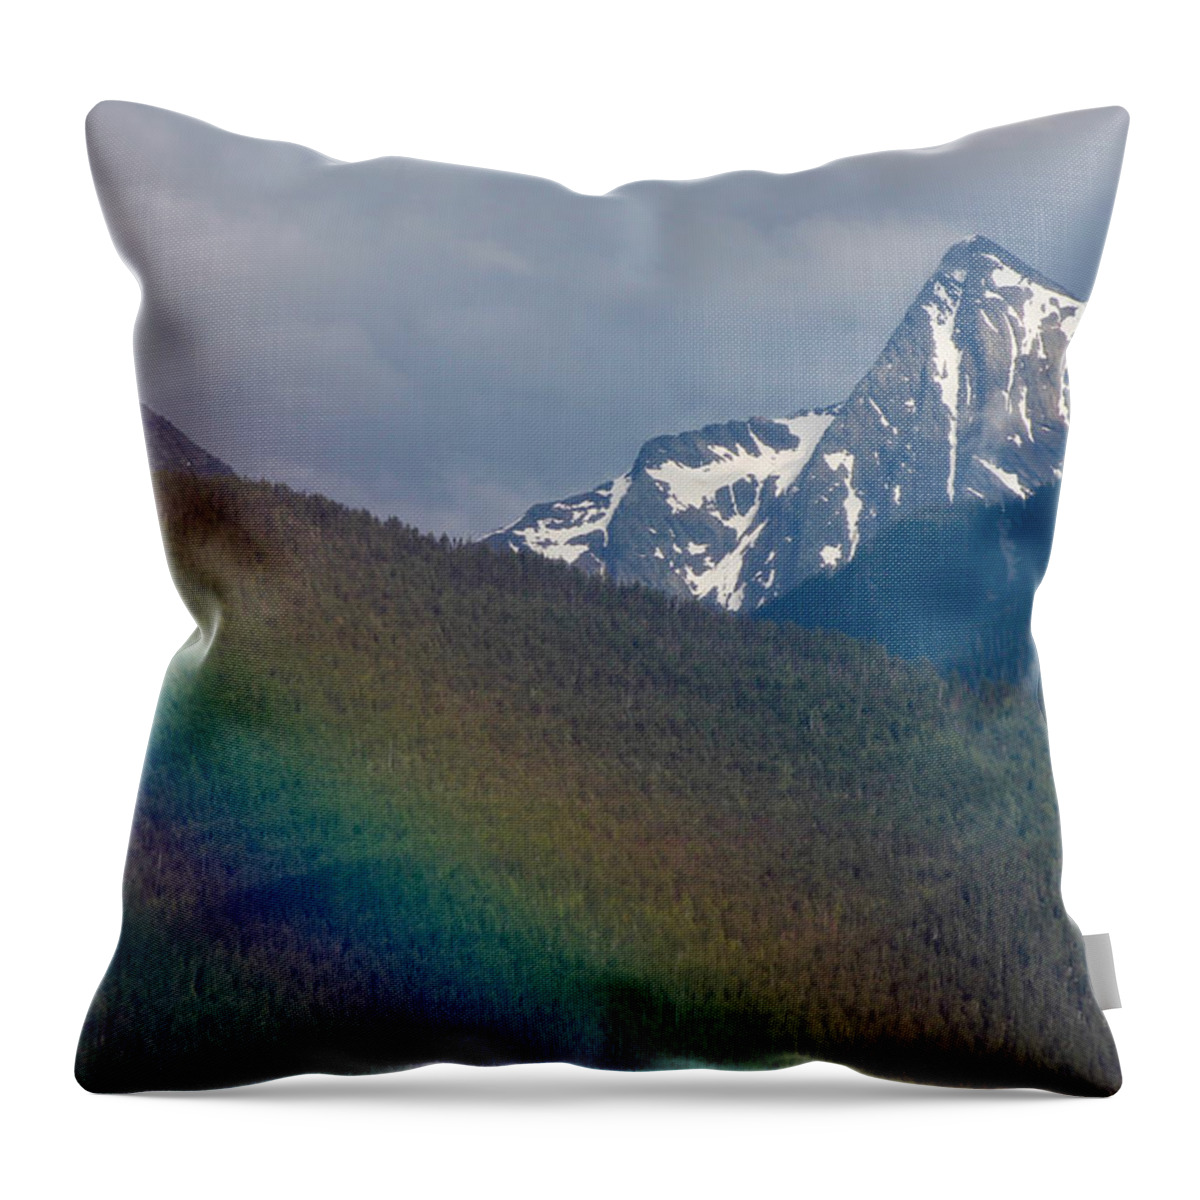 Loki Throw Pillow featuring the photograph Loki Rainbow by Cathie Douglas